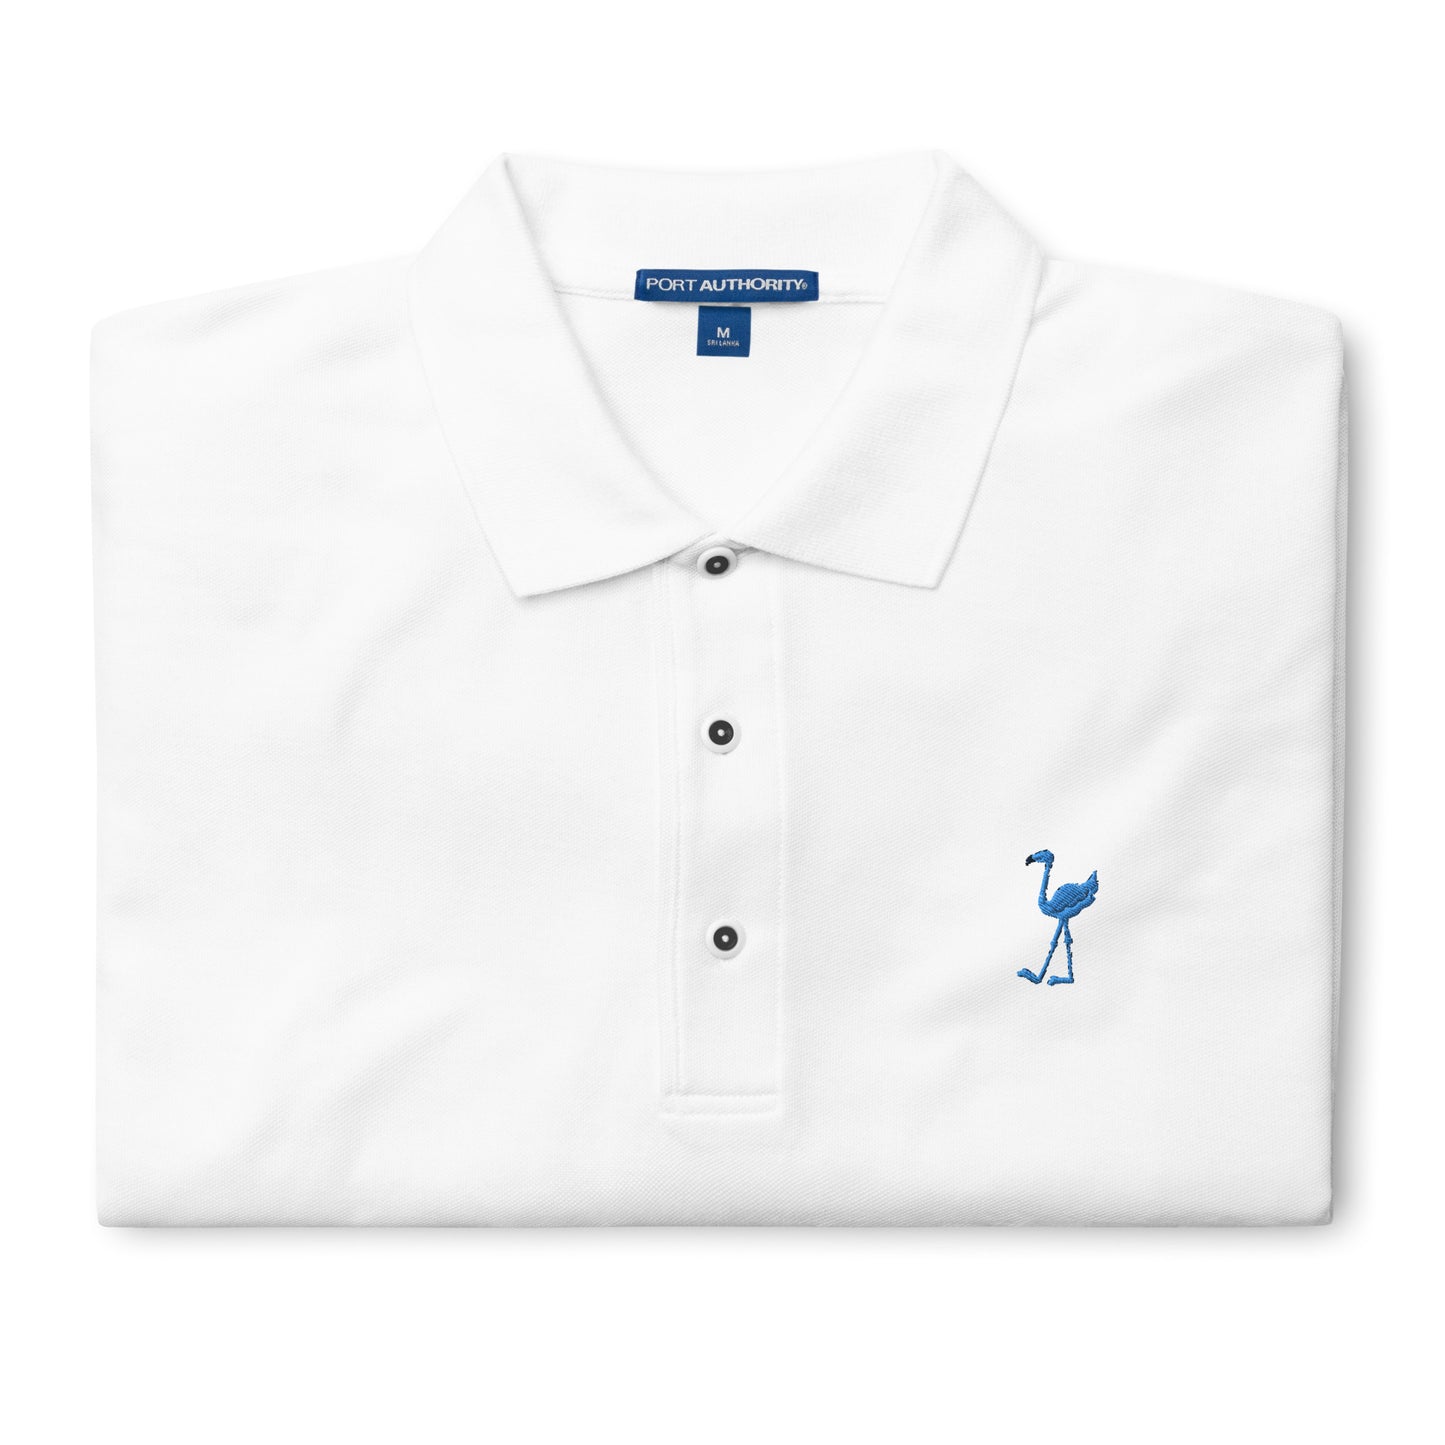 Lu Lu The Blue Flamingo's Original Premium Embroidery Polo Shirt for Men - The flamingo polo shirt that started it all!!!